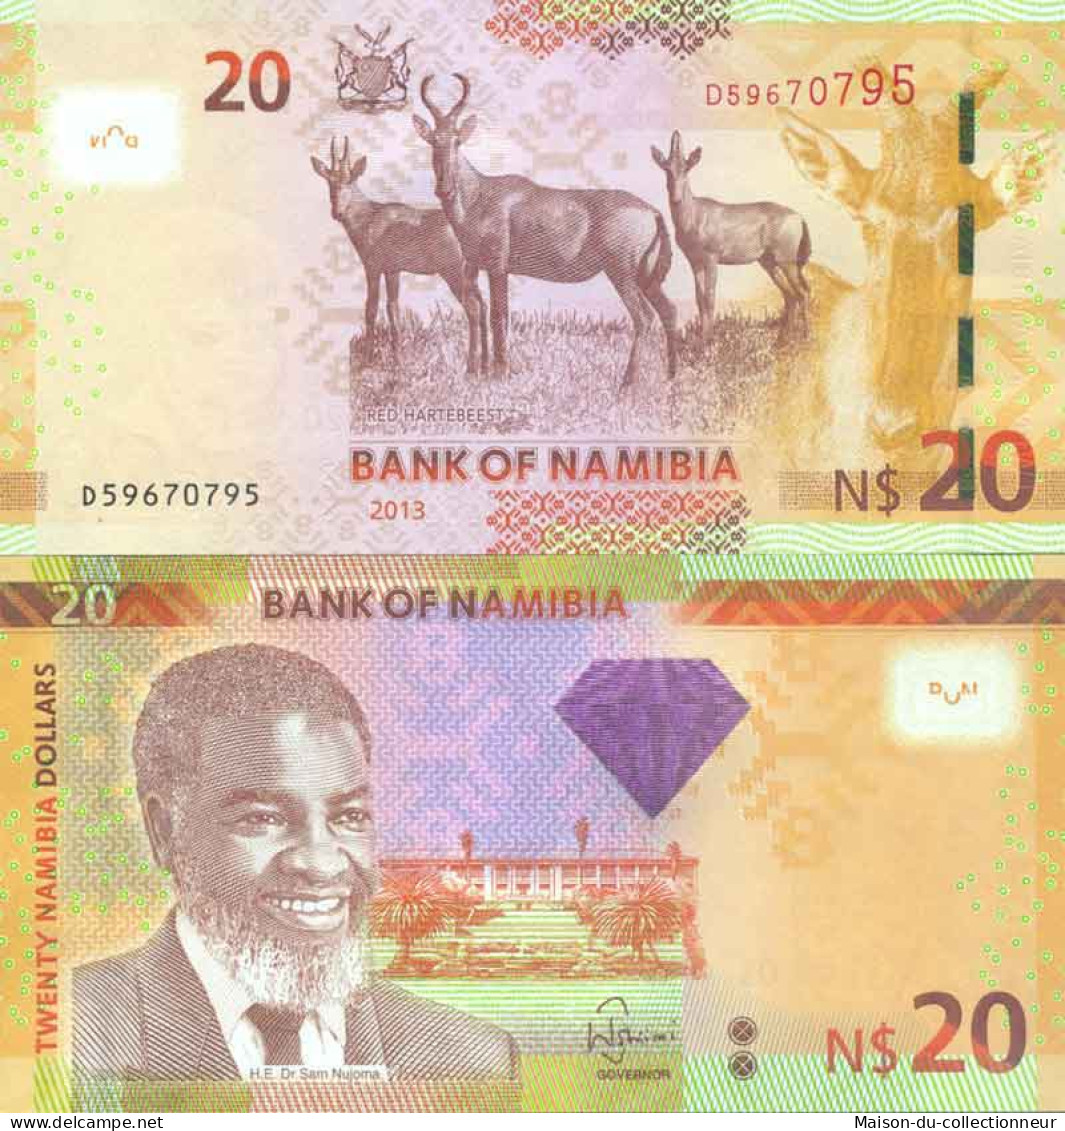 Billet De Banque Collection Namibie - PK 17 - 20 Dollars - Namibie